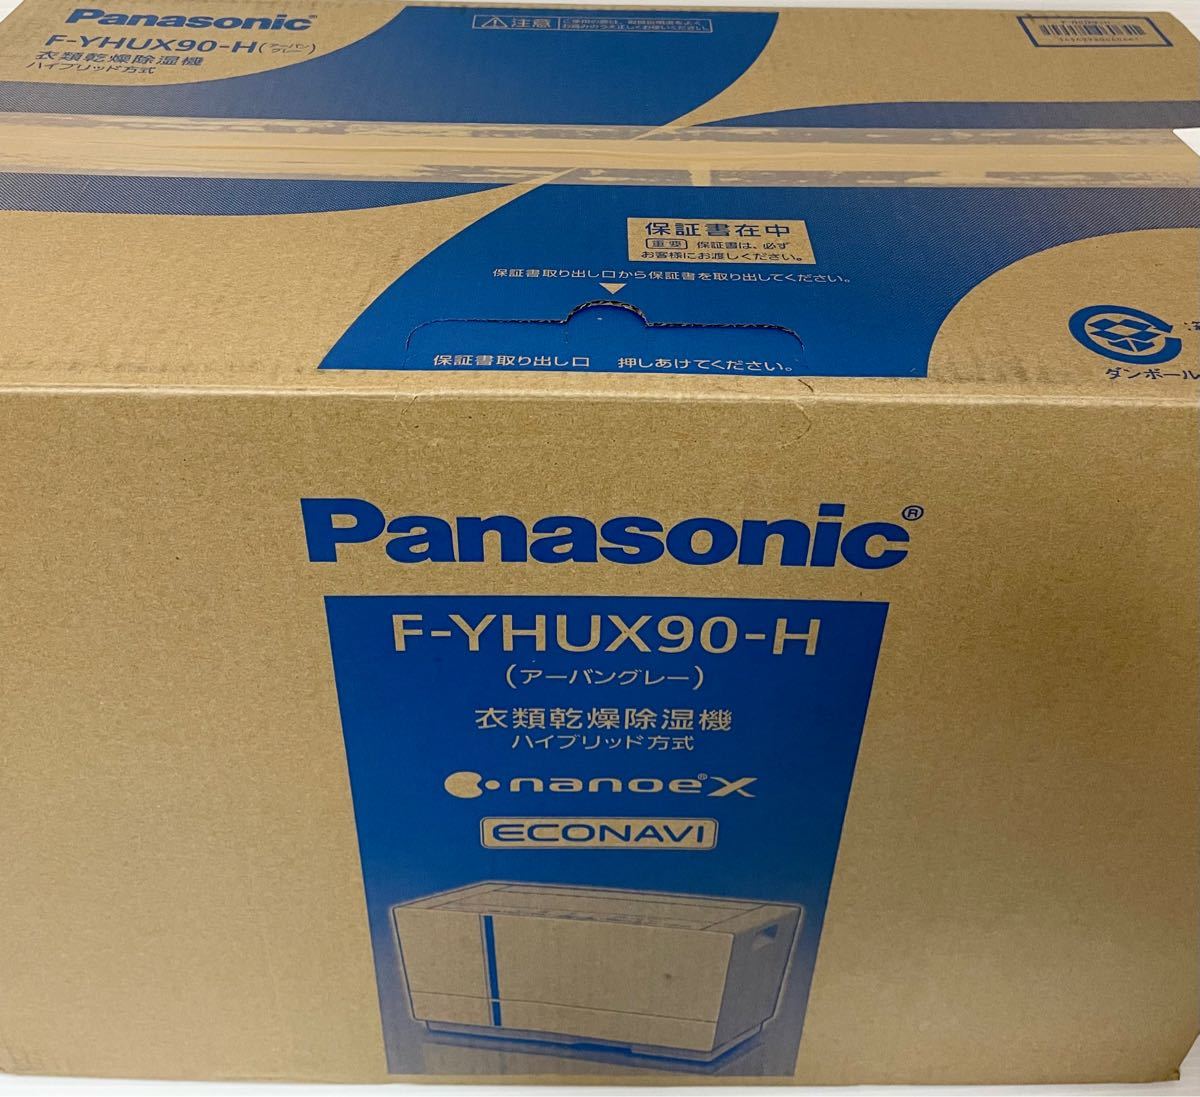 Panasonic ハイブリッド方式 衣類乾燥除湿機 F-YHUX90-H ア… eva.gov.co